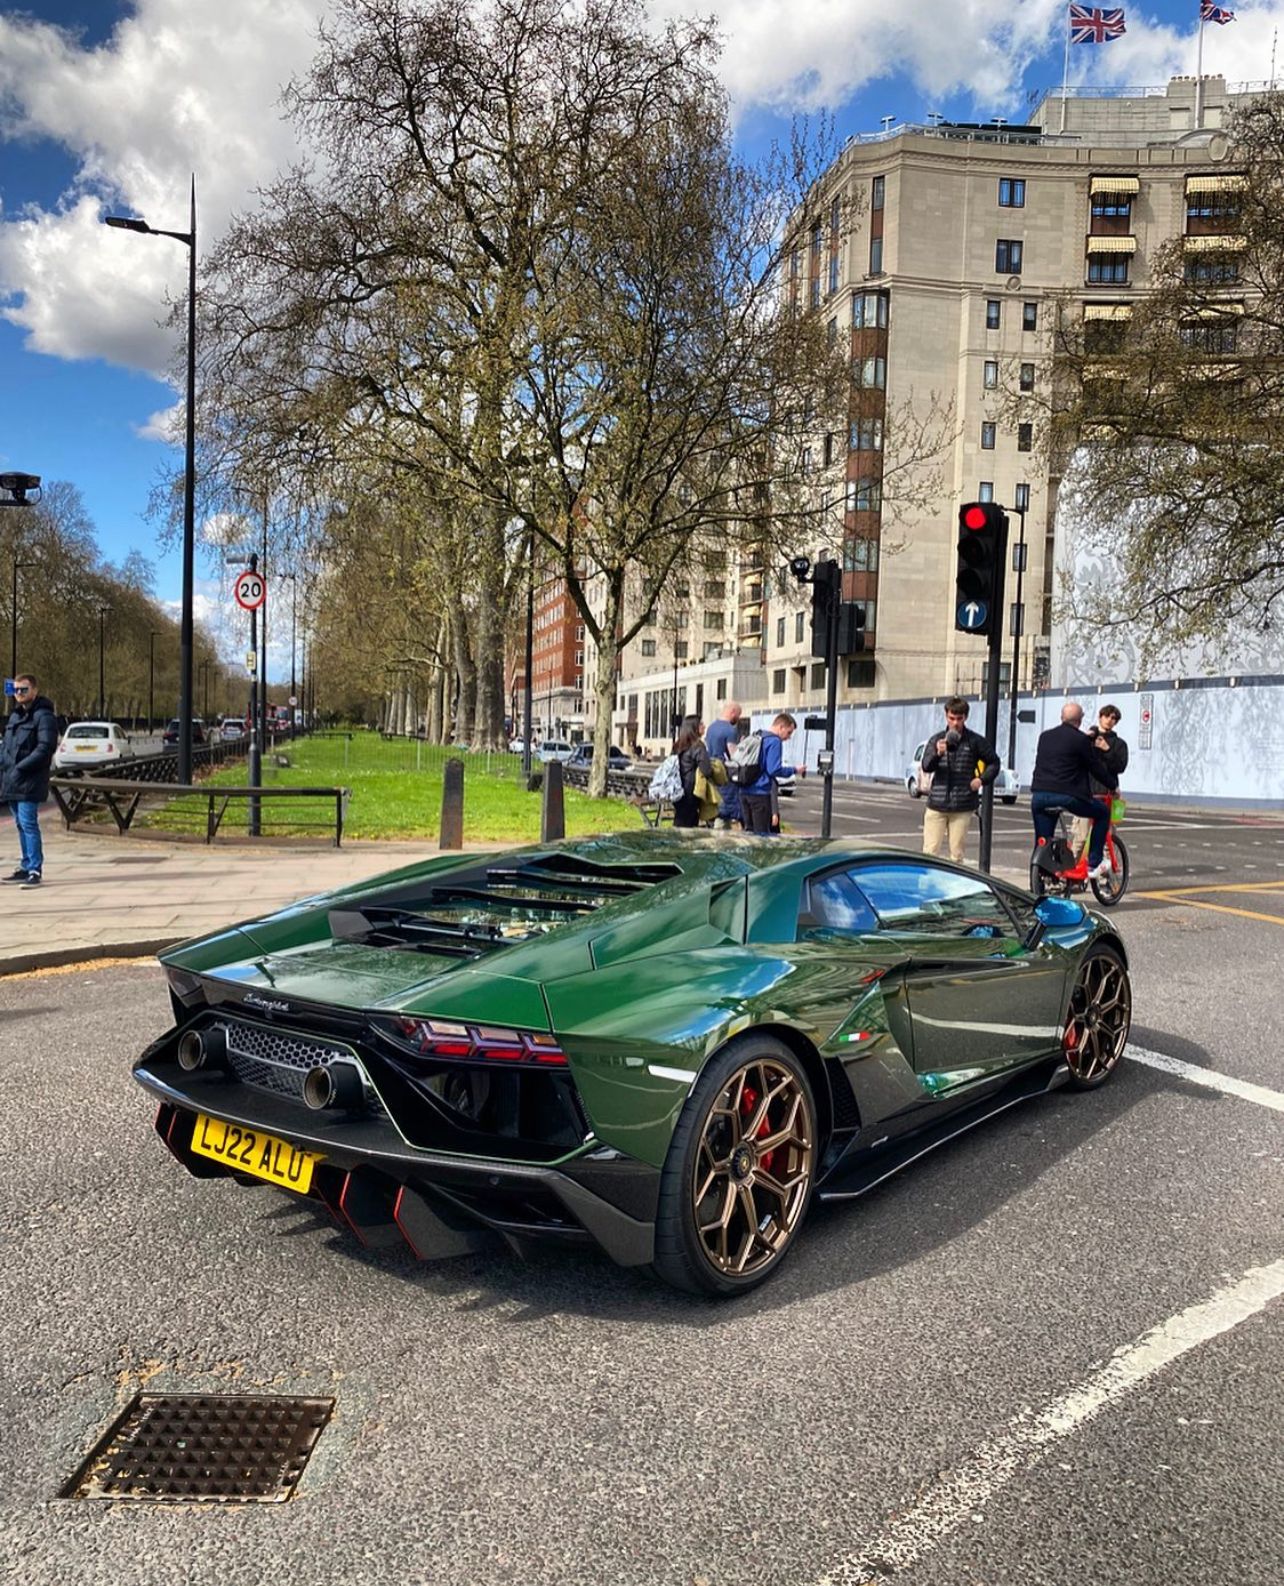 Green Lamborghini Aventador in London